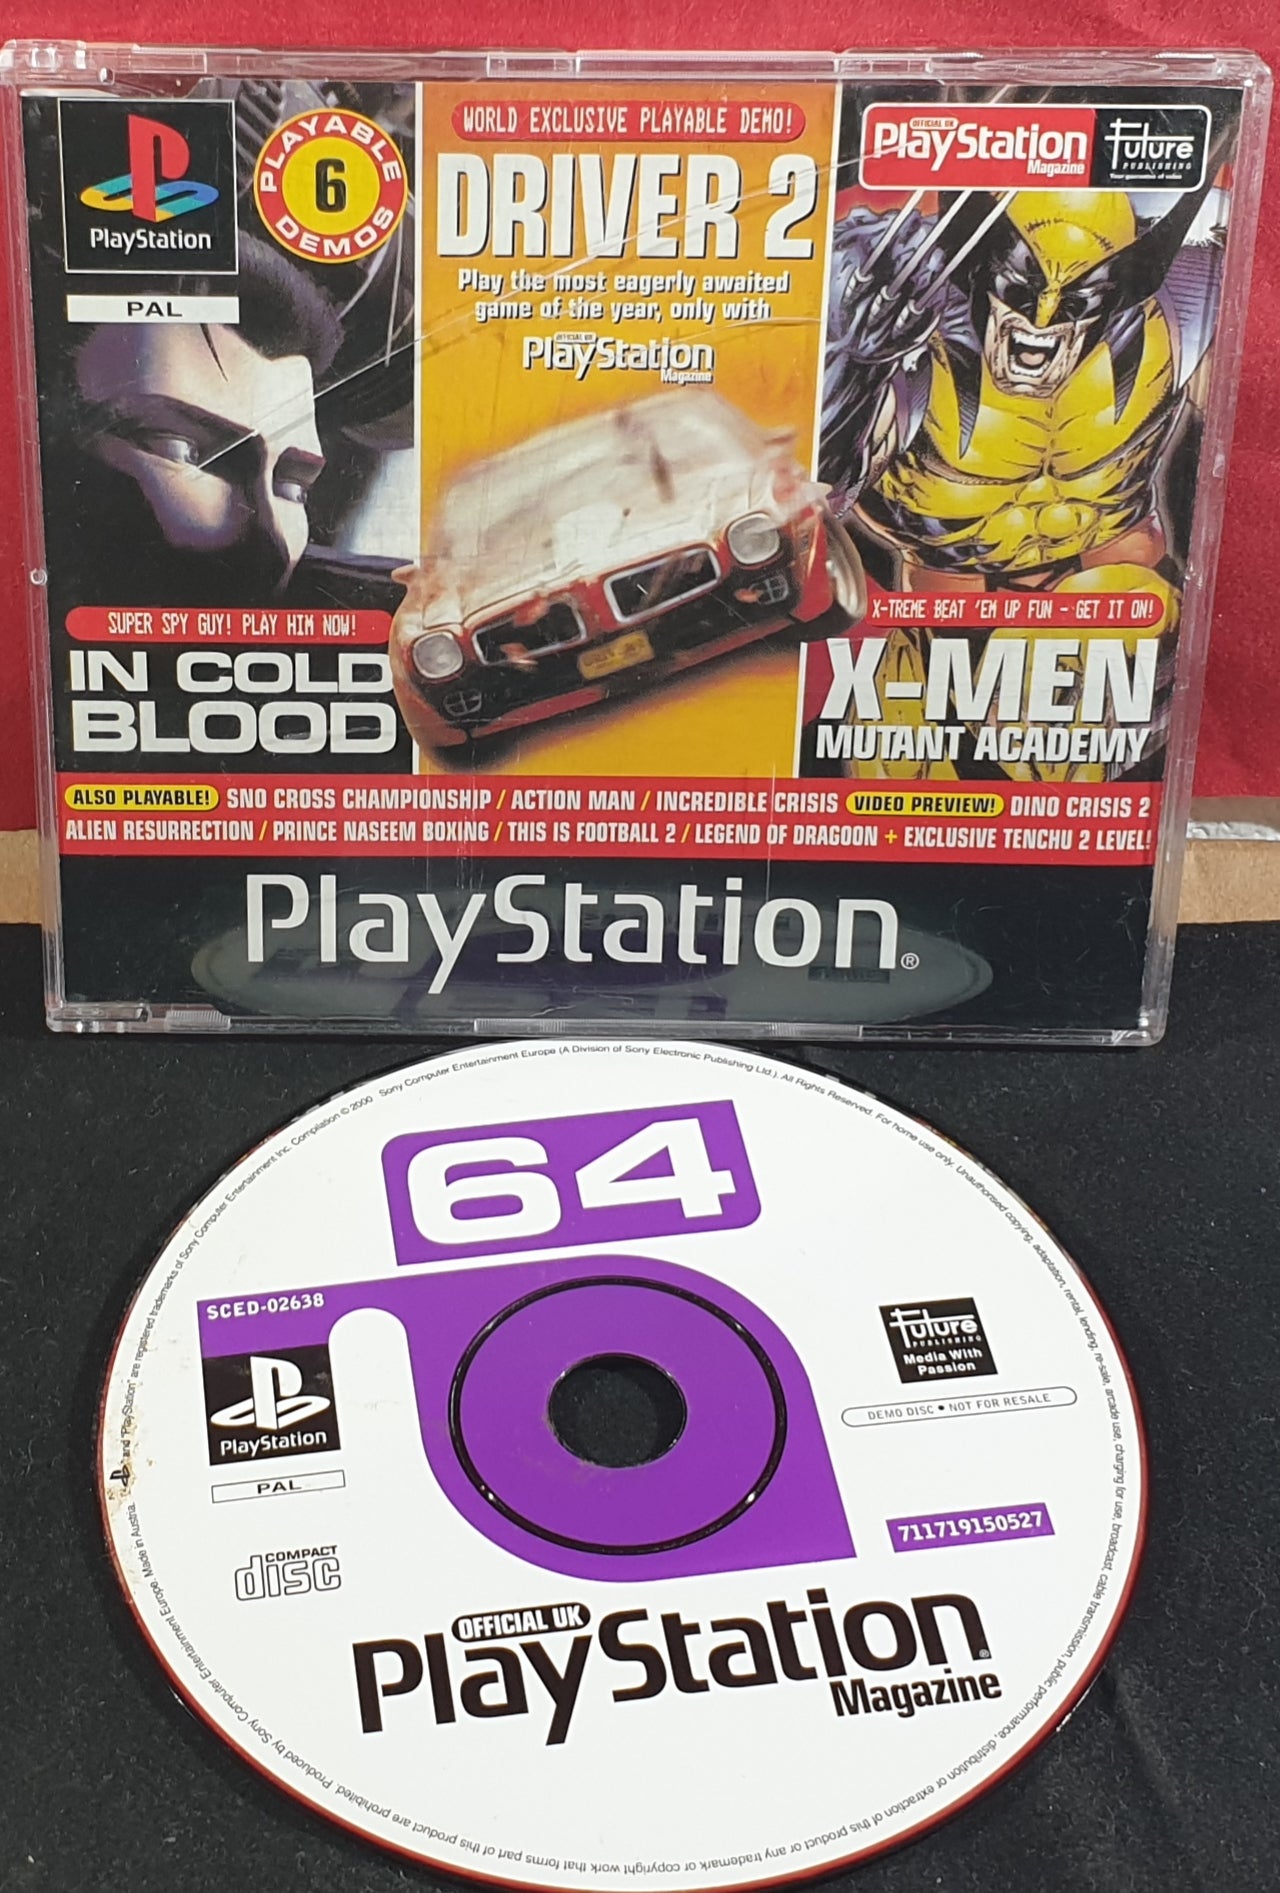 Sony Playstation 1 (PS1) Magazine Demo Disc 64